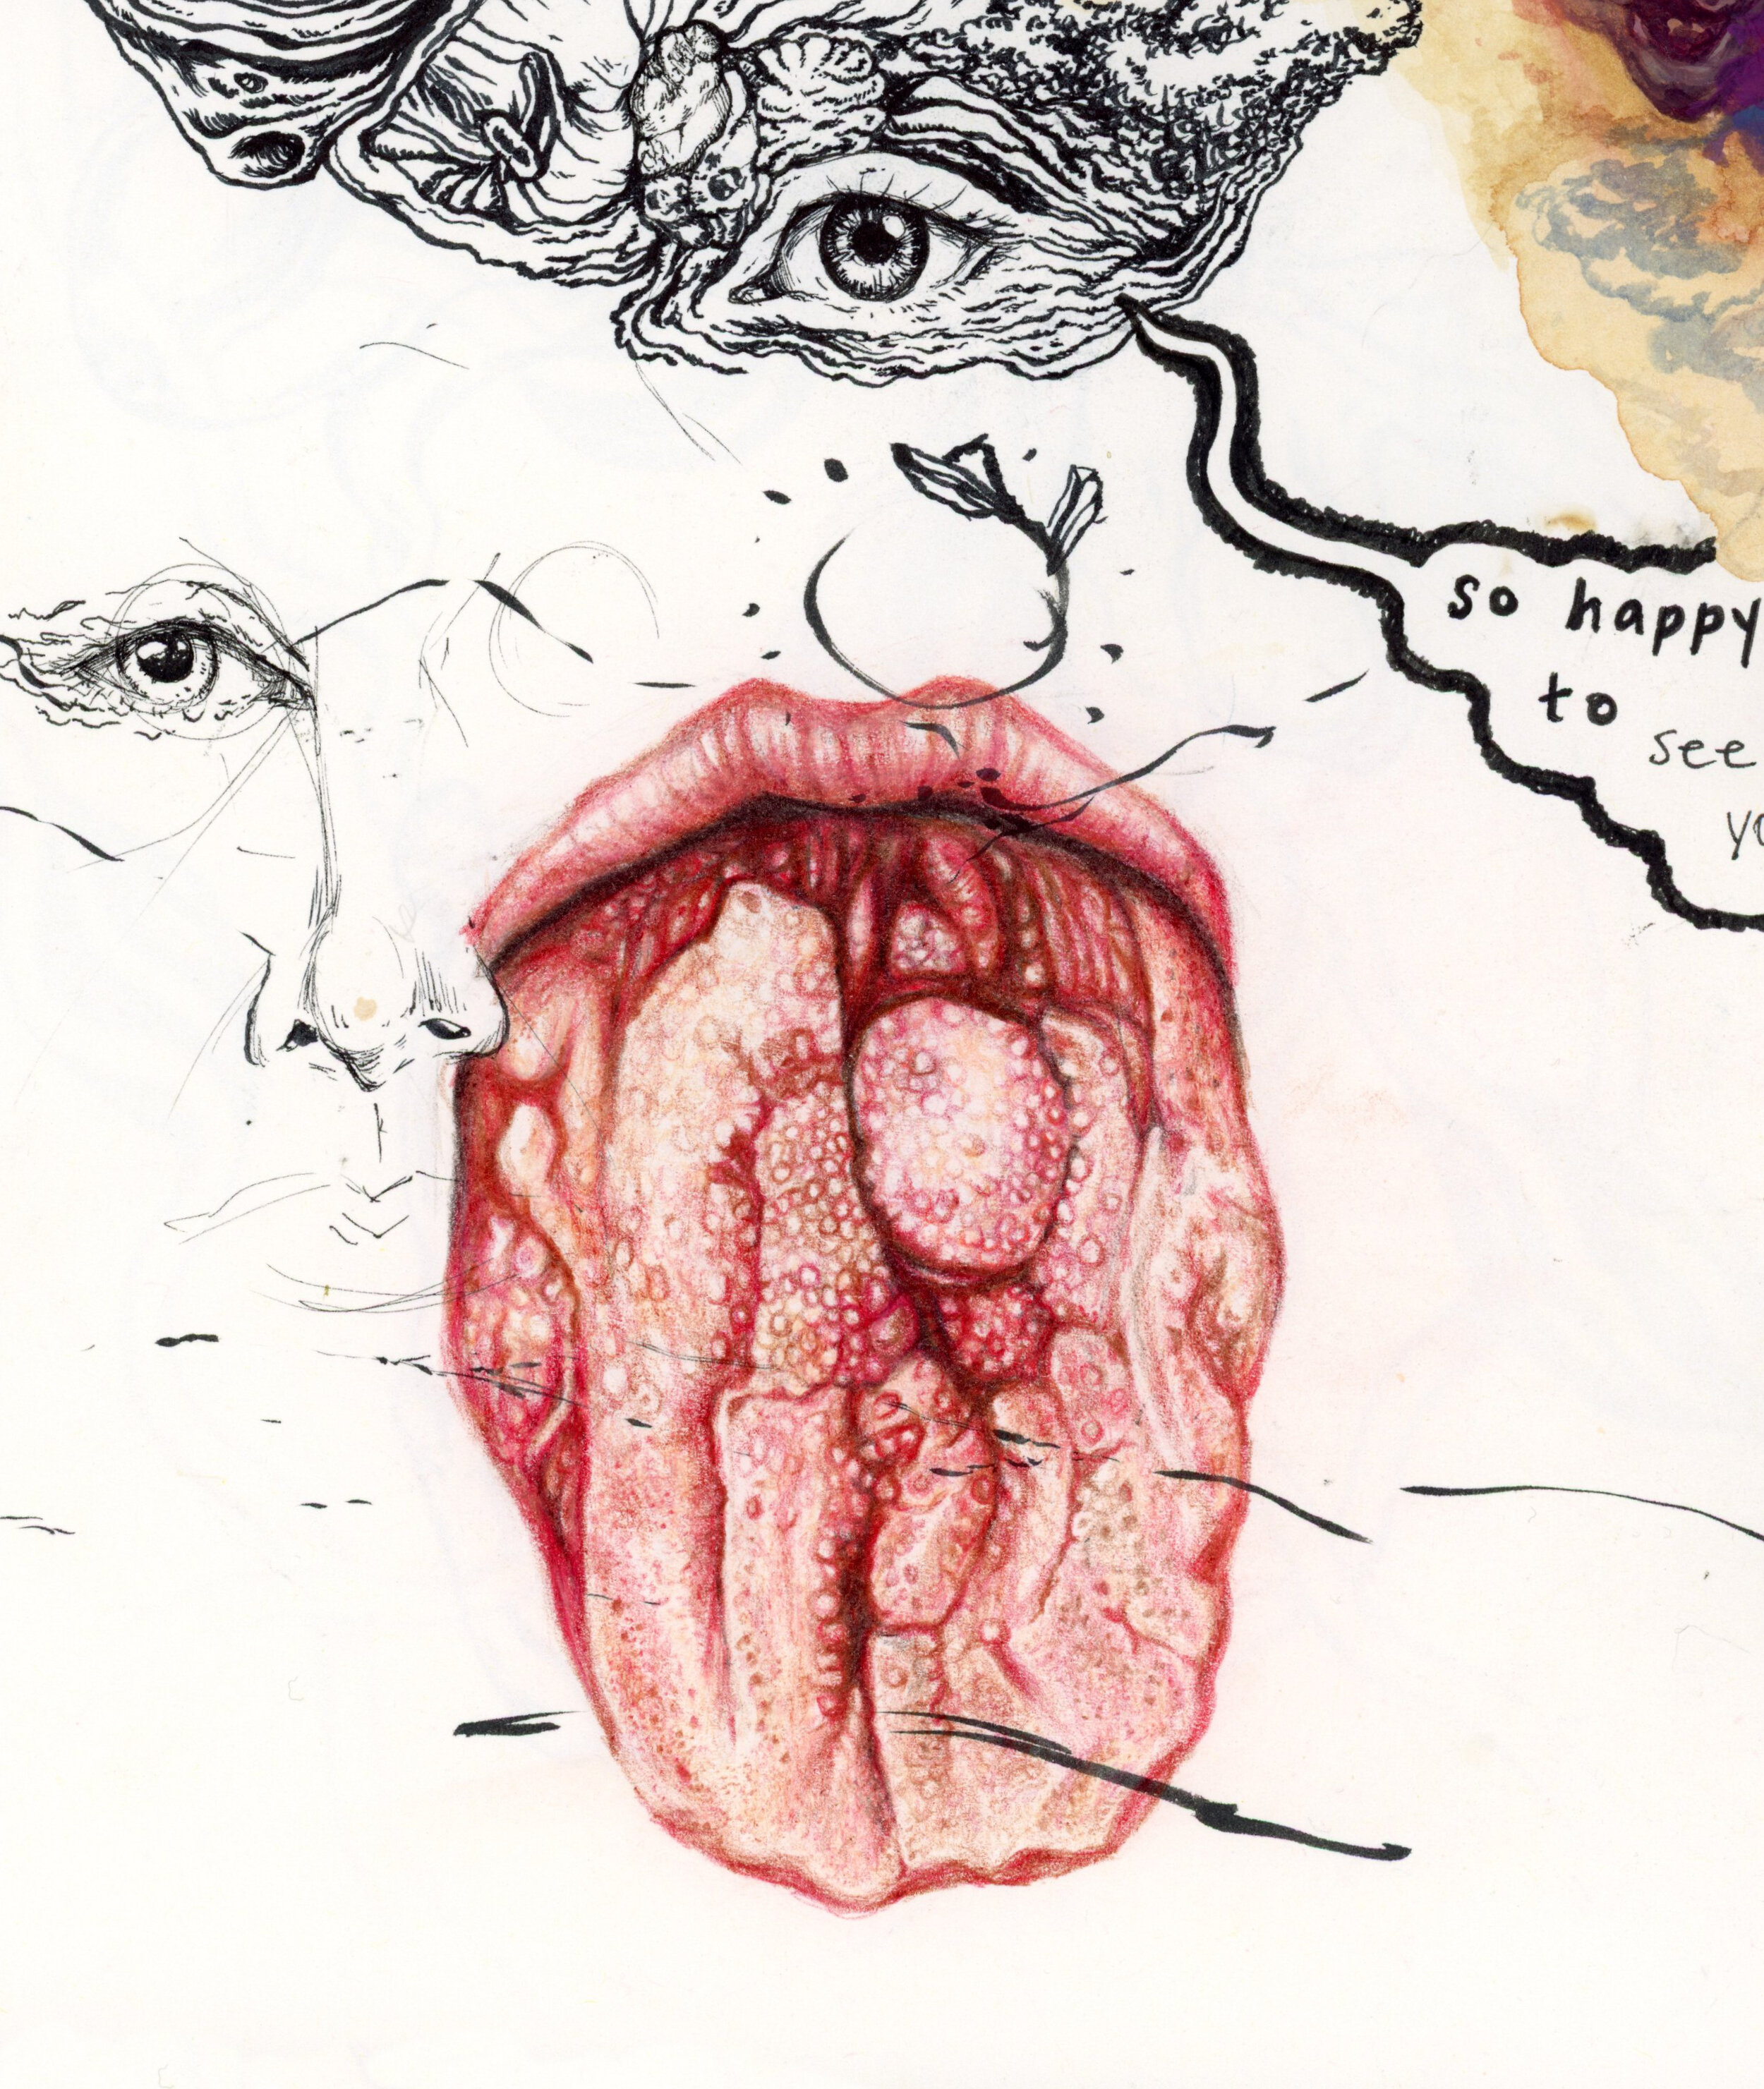 Diseased Tongue